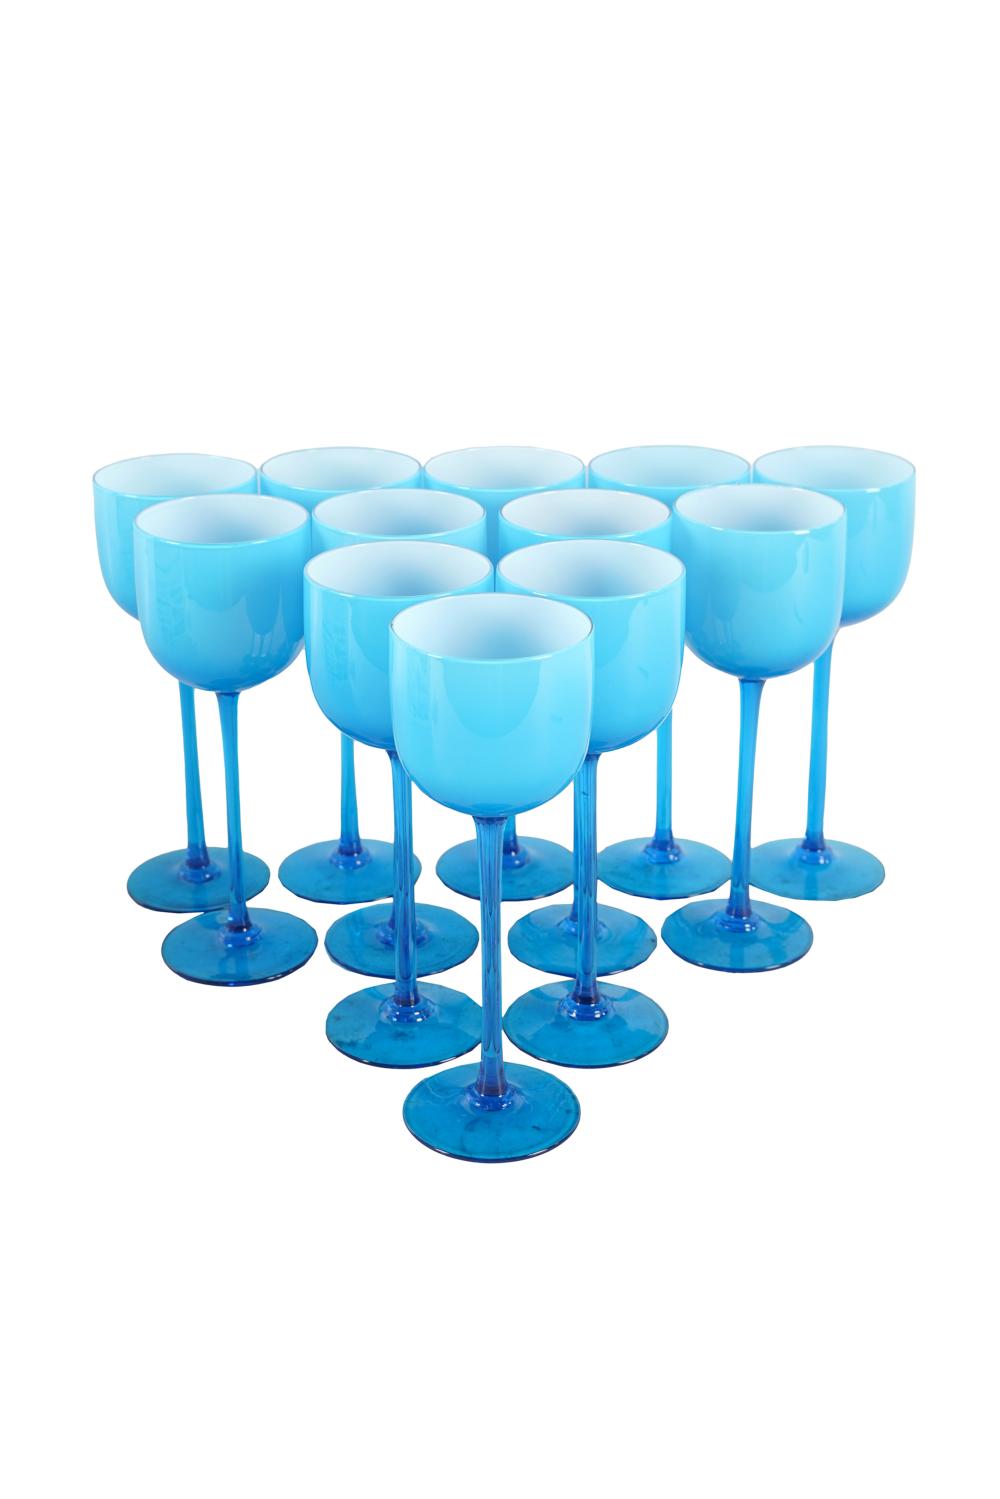 TWELVE MURANO STYLE BLUE GLASS 331a65